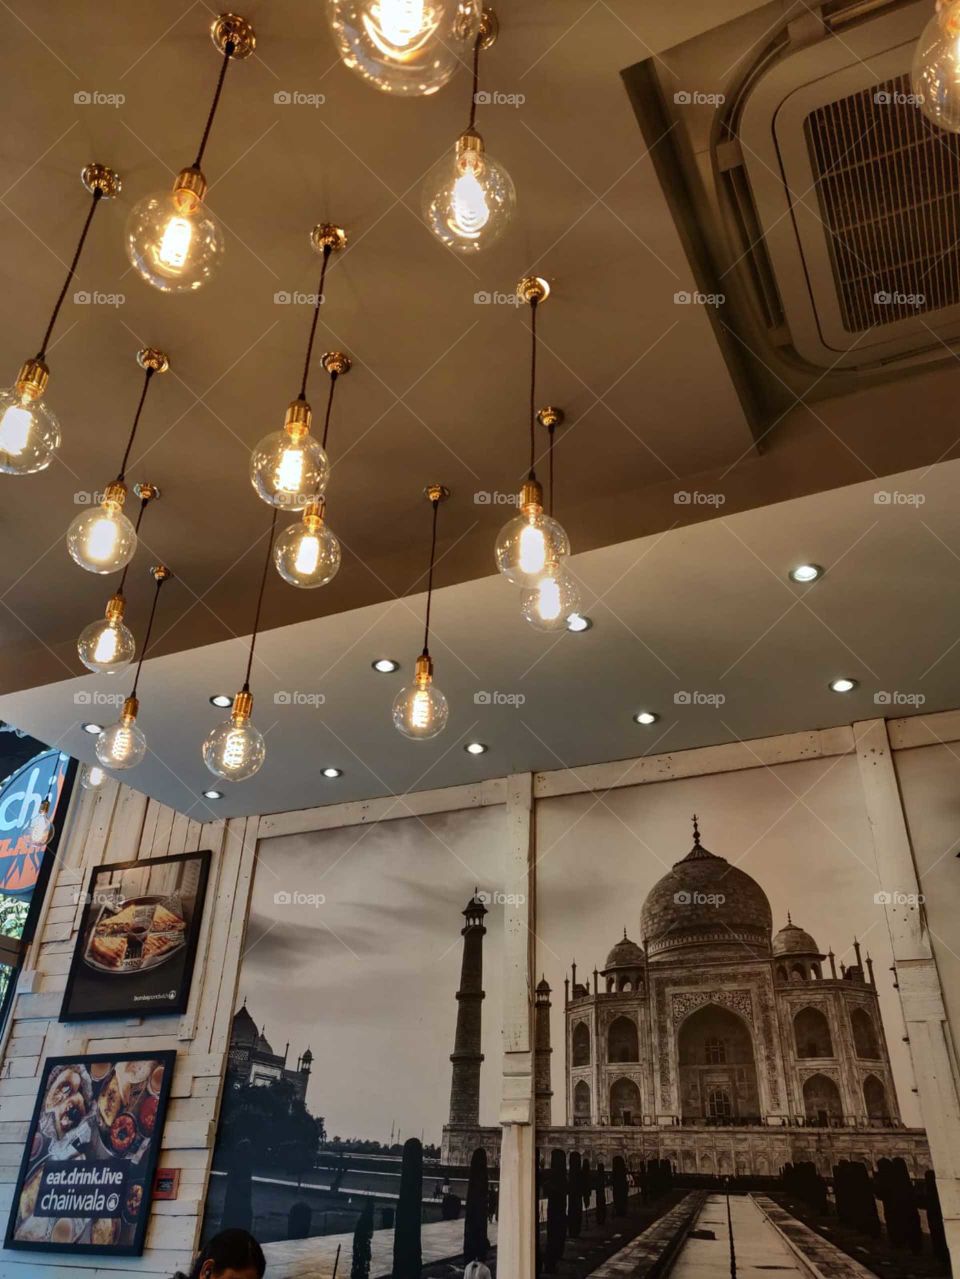 # my leisure time# relaxation# light# design# interior# Taj mahal# coffee shop#